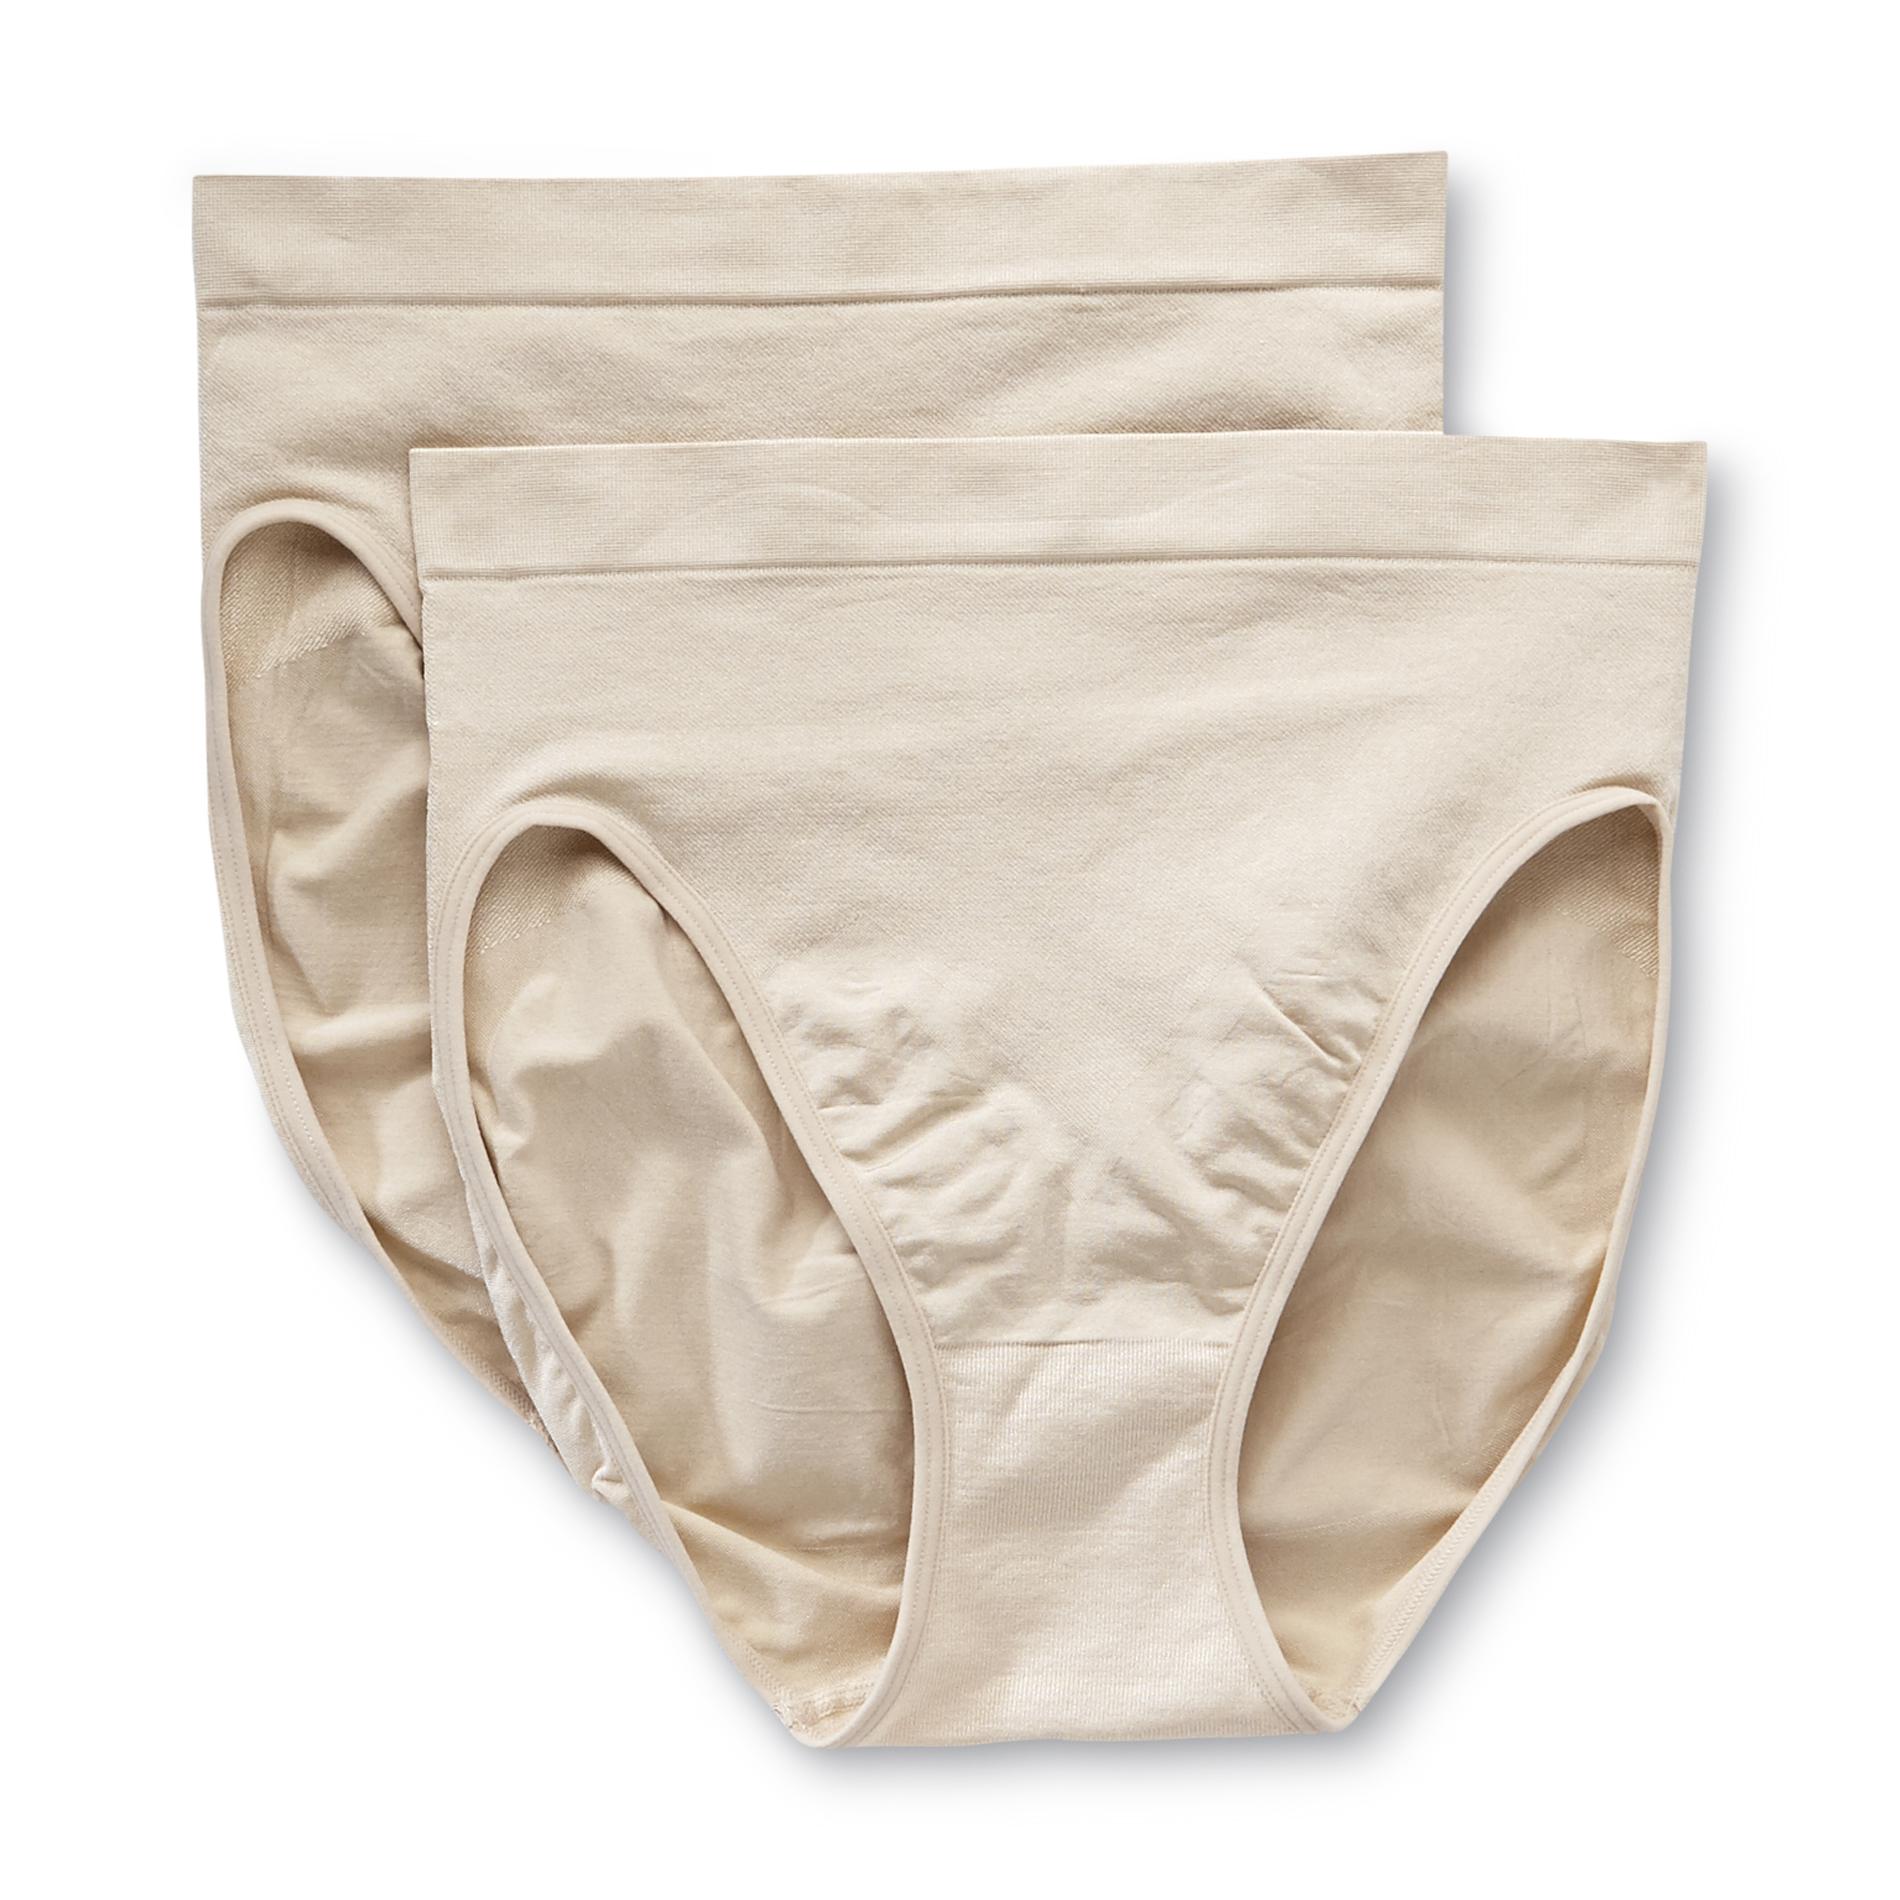 Maidenform Women's 2-Pack Everyday Control Hi-Cut Panties